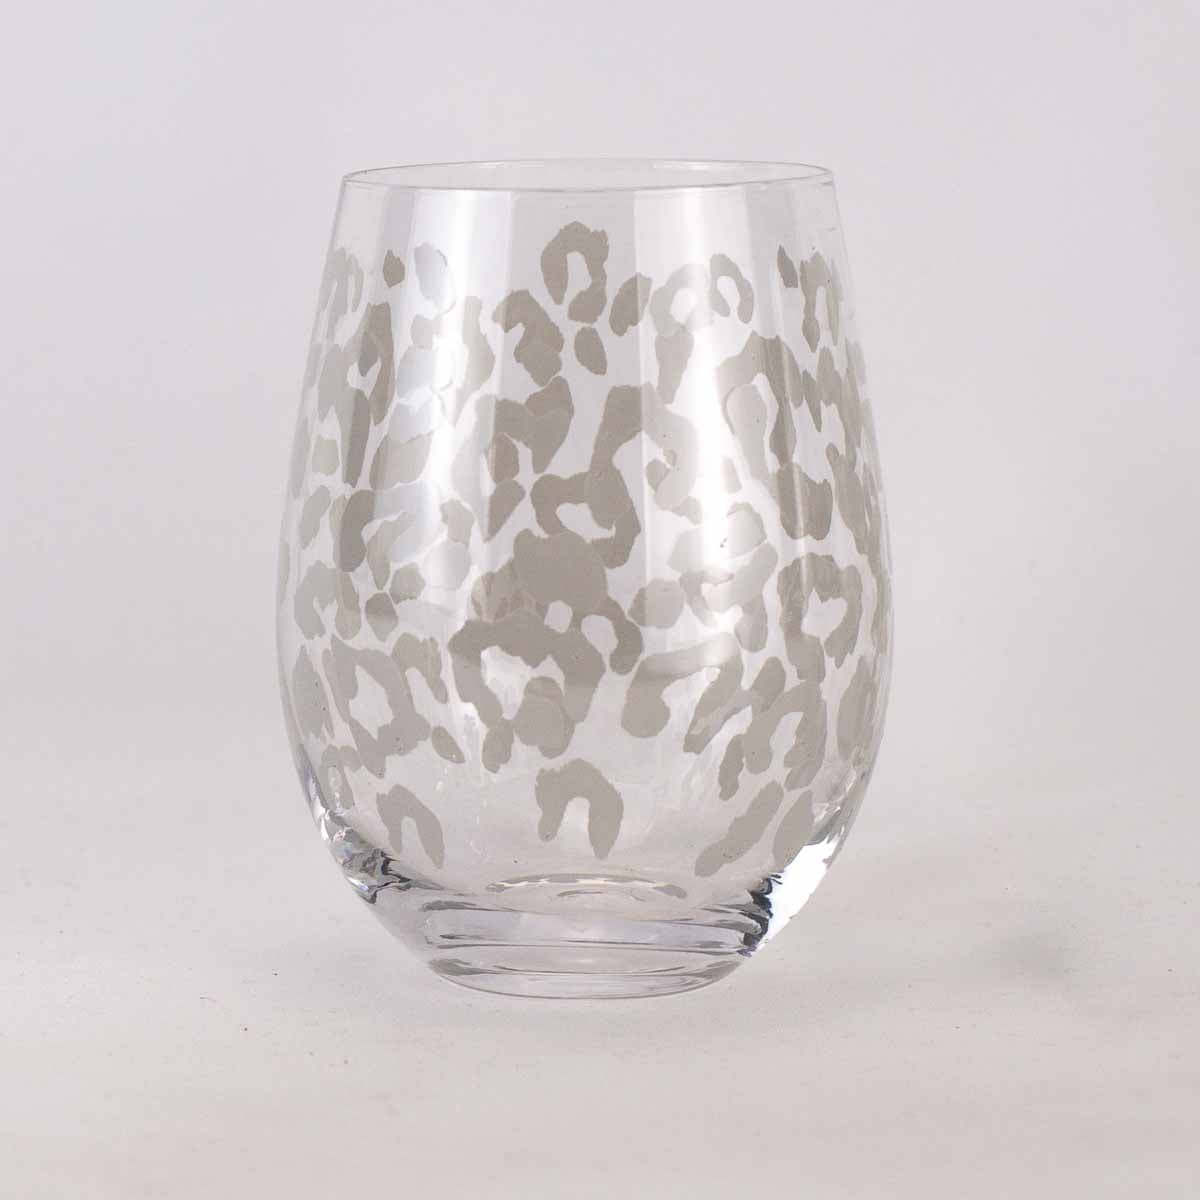 Tiger head wine glass in transparent glass